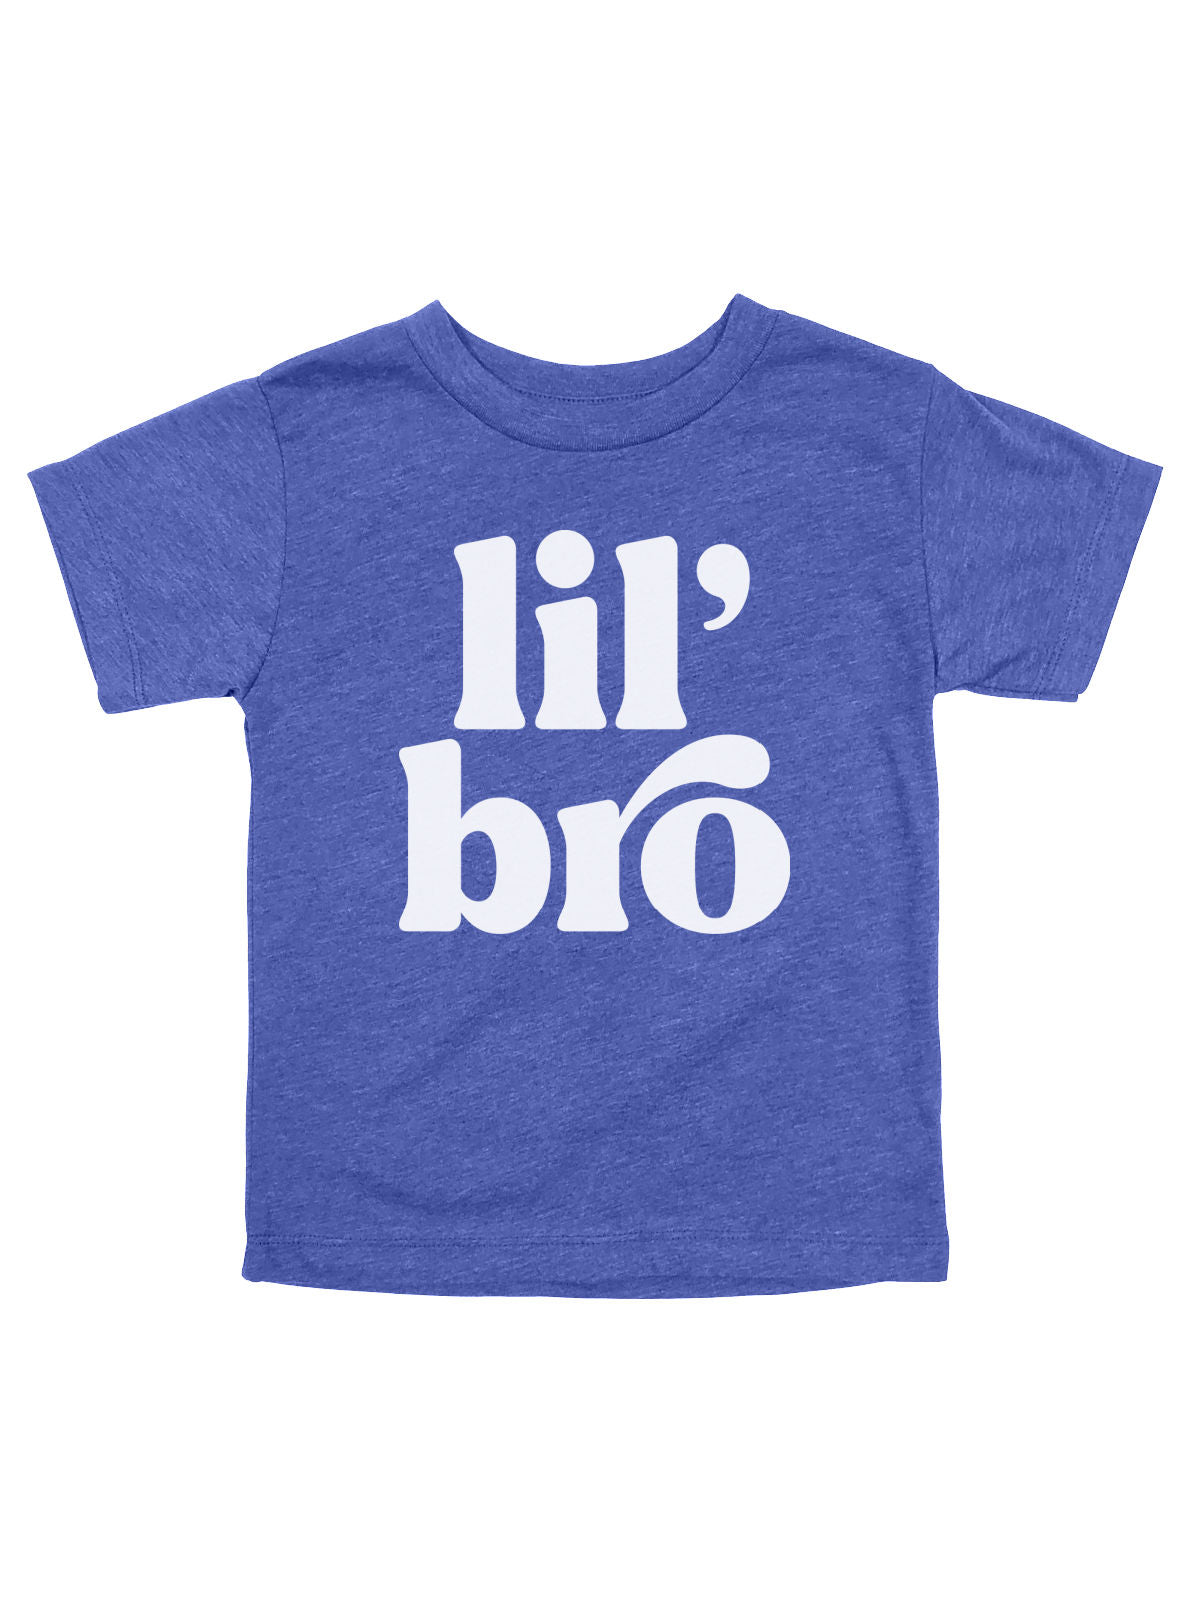 Lil Bro Baby Boy Bodysuit in Blue